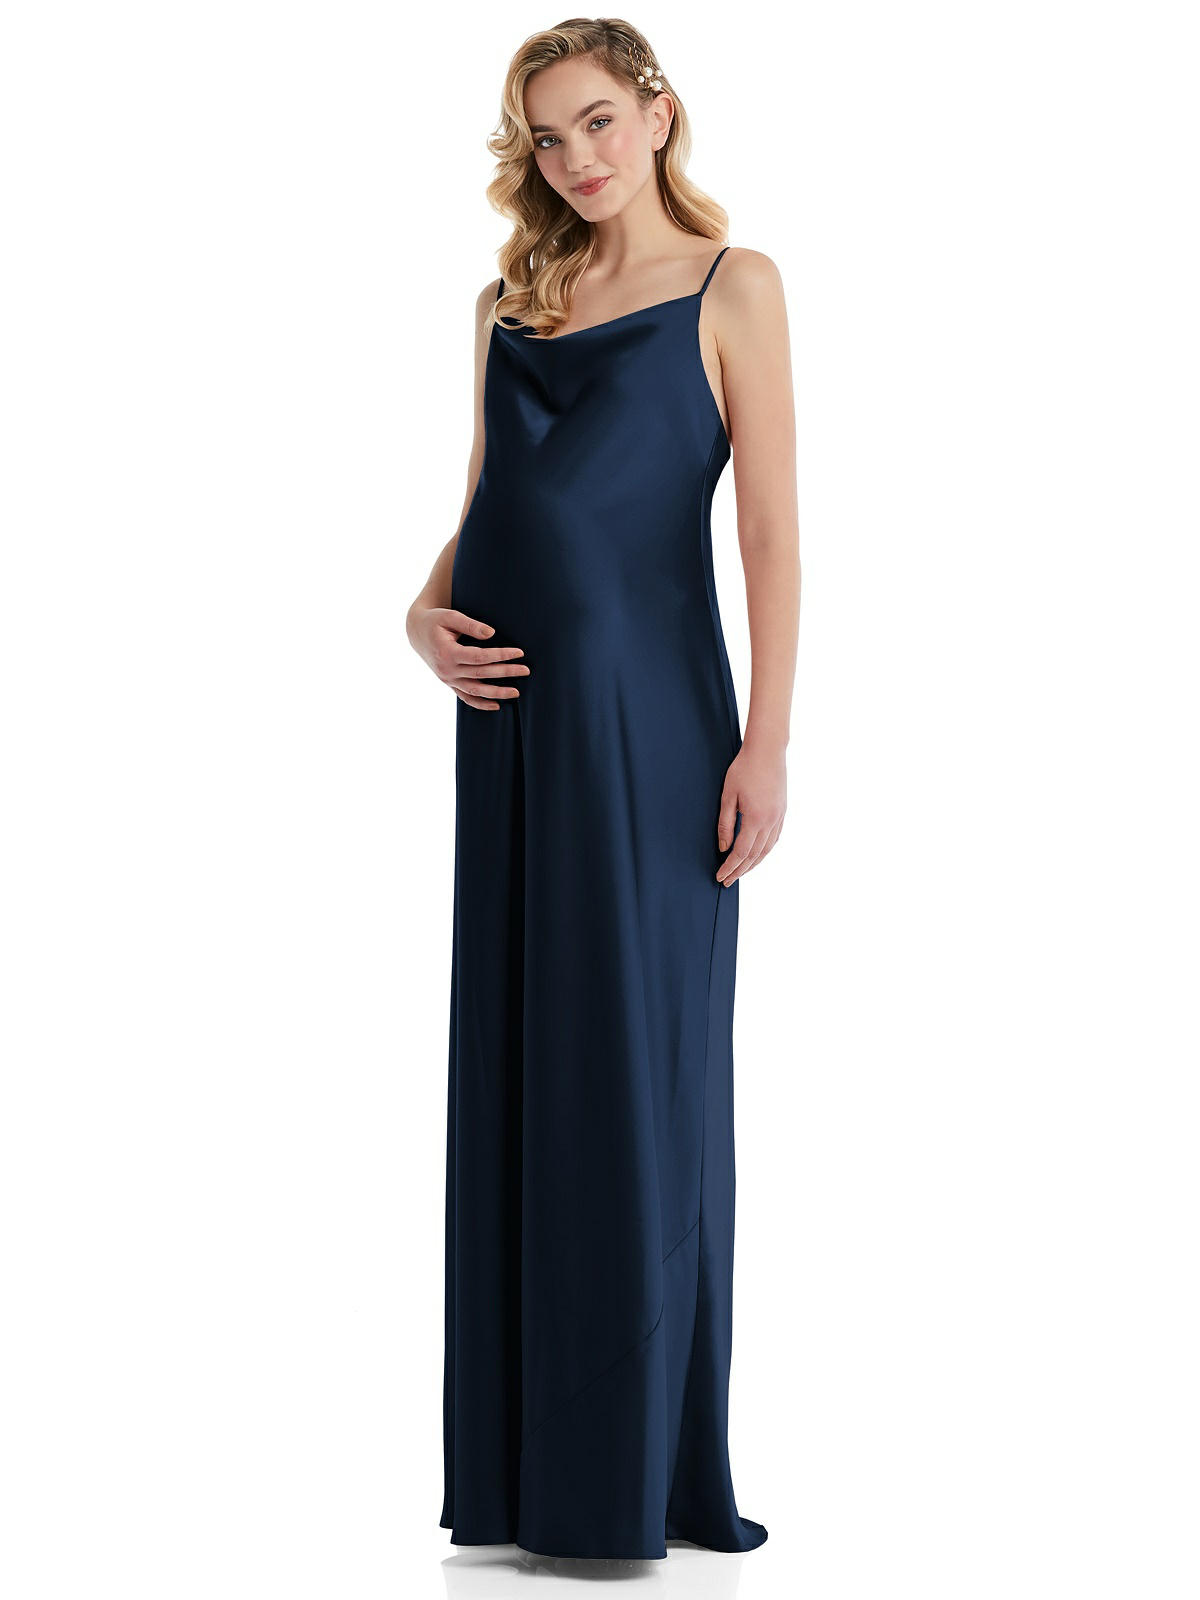 Gracie Maternity Bridesmaid Dress by Dessy – Midnight Blue